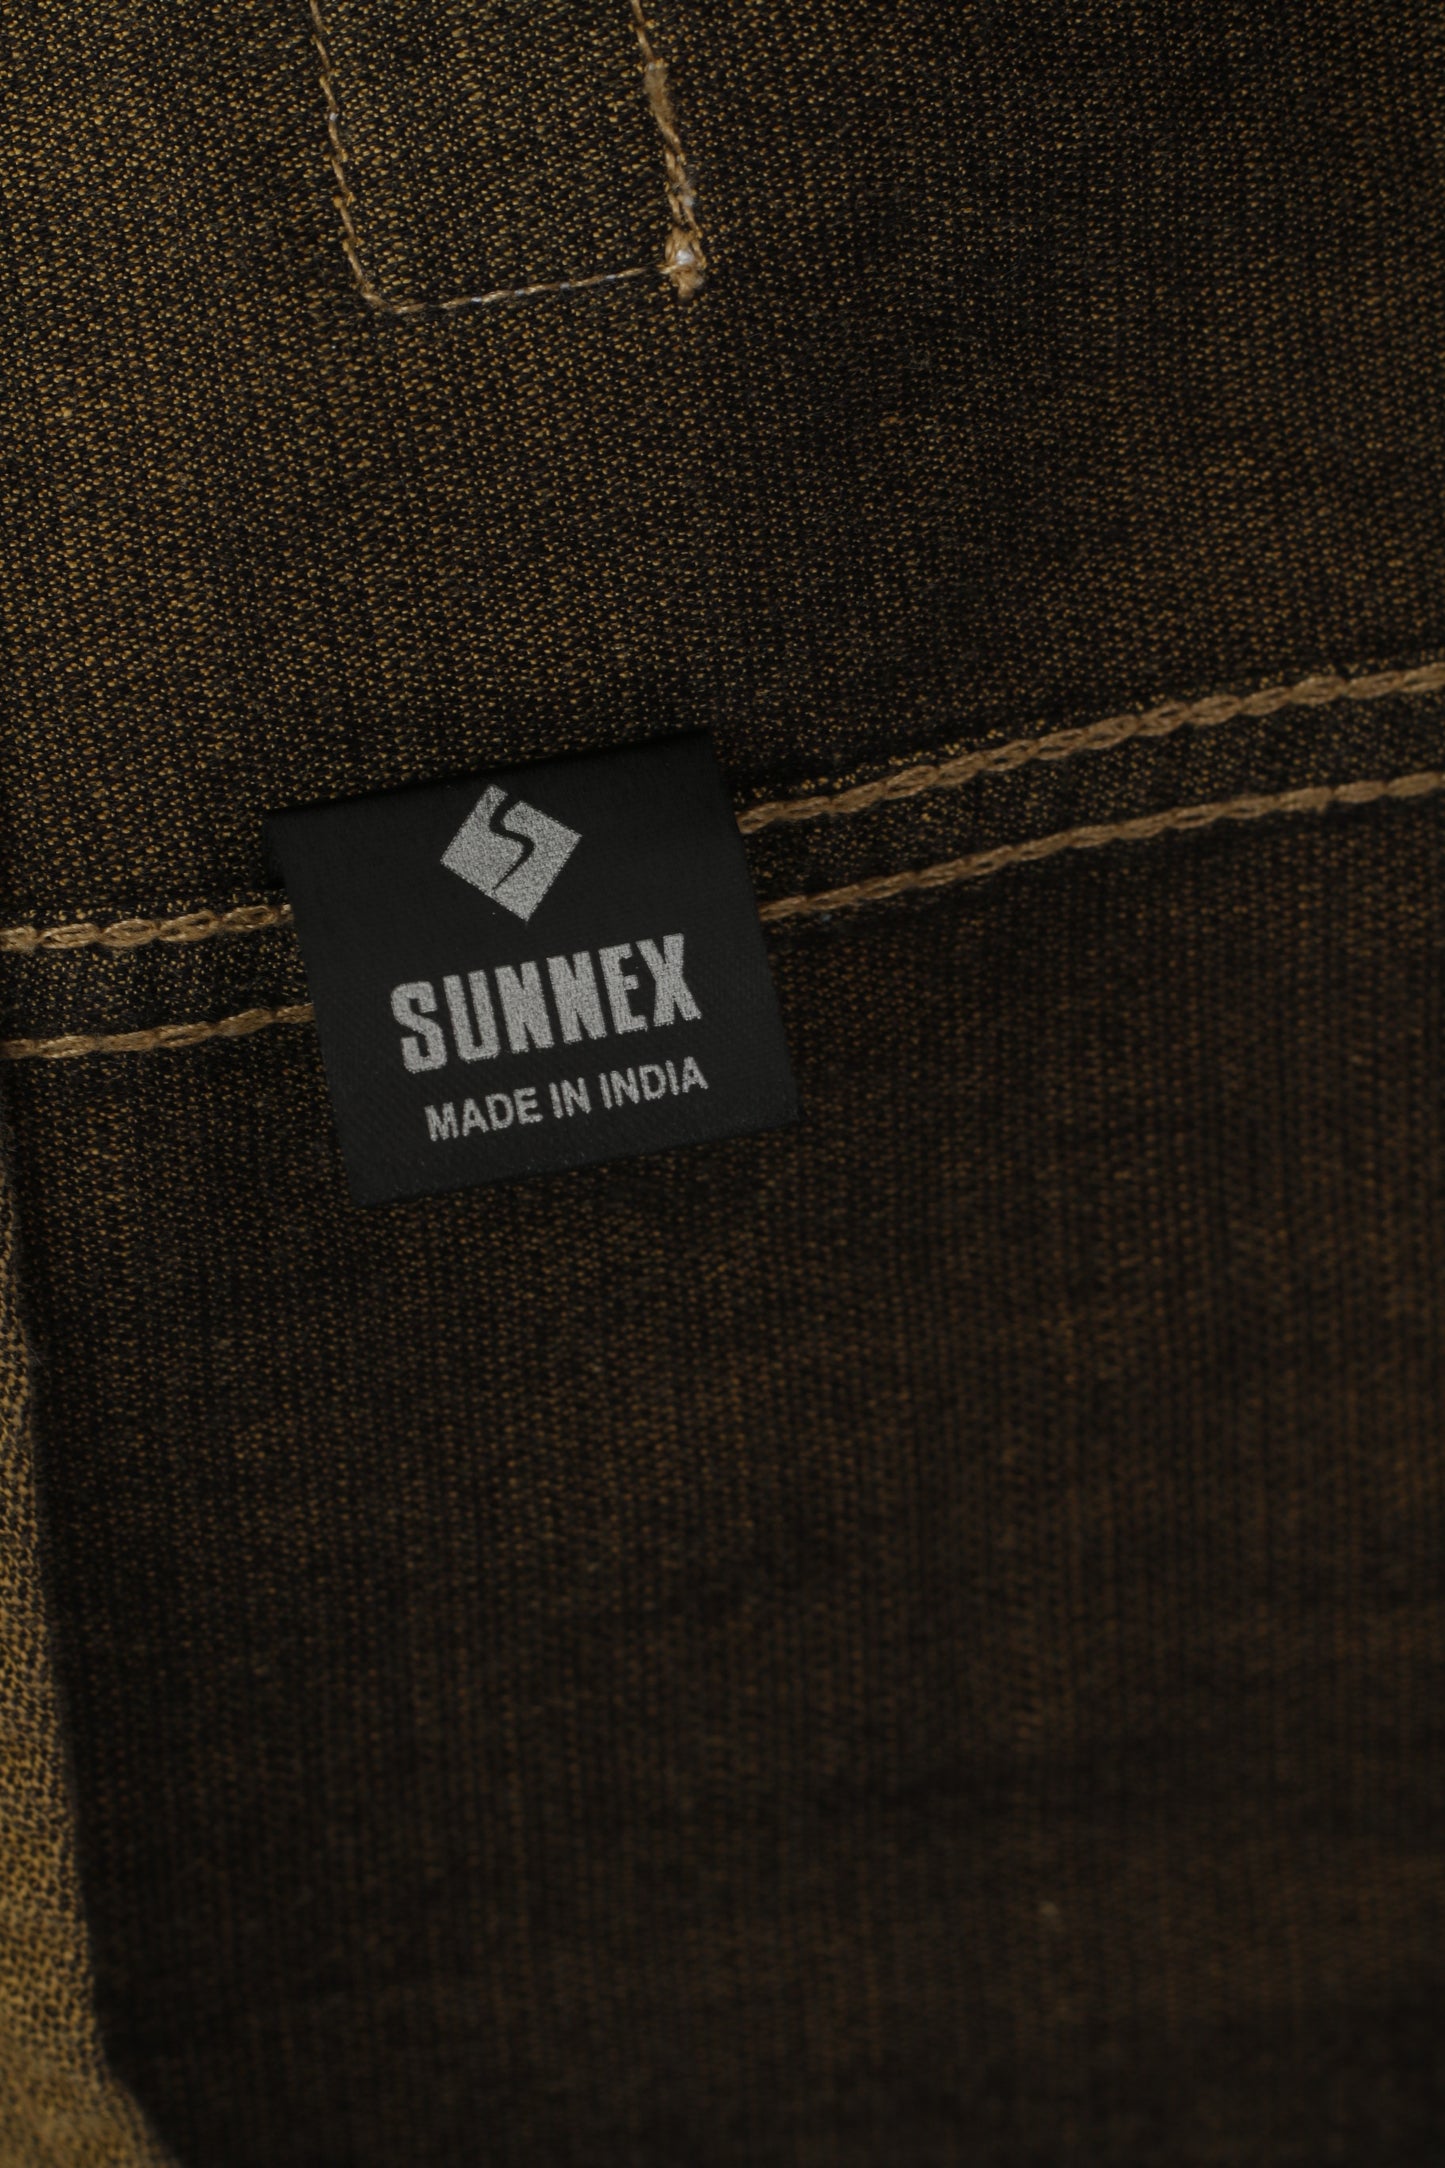 Sunnex Jeans Men L (M) Casual Shirt Brown India Slim Fit Pure Cotton Long Sleeve Top